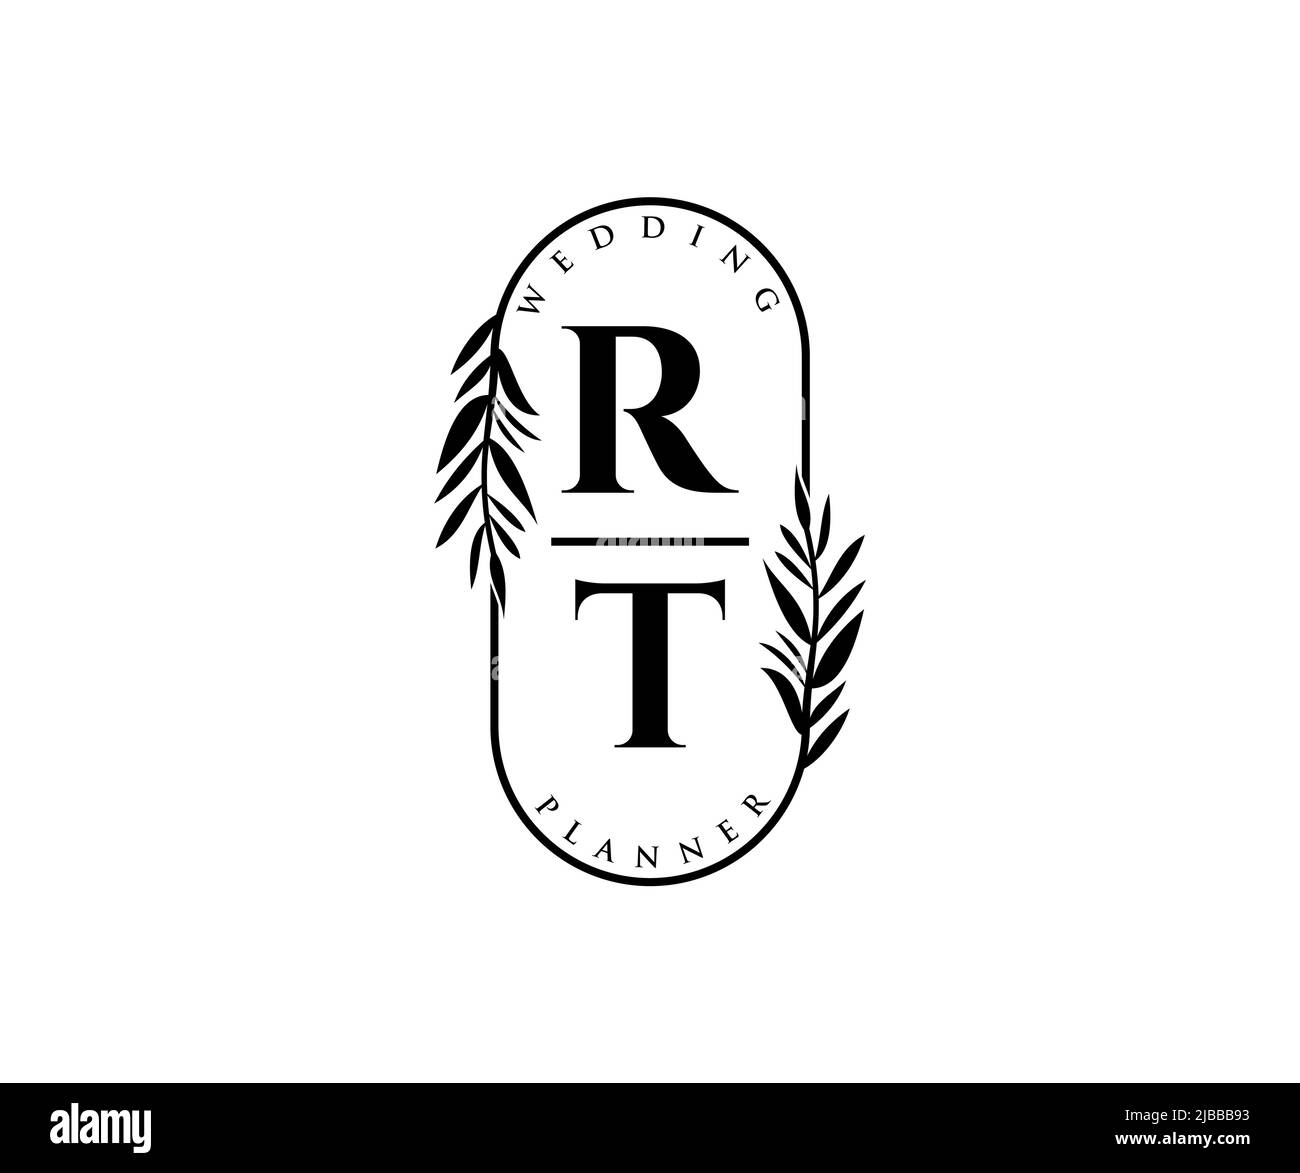 Rt initials letter wedding monogram logos Vector Image